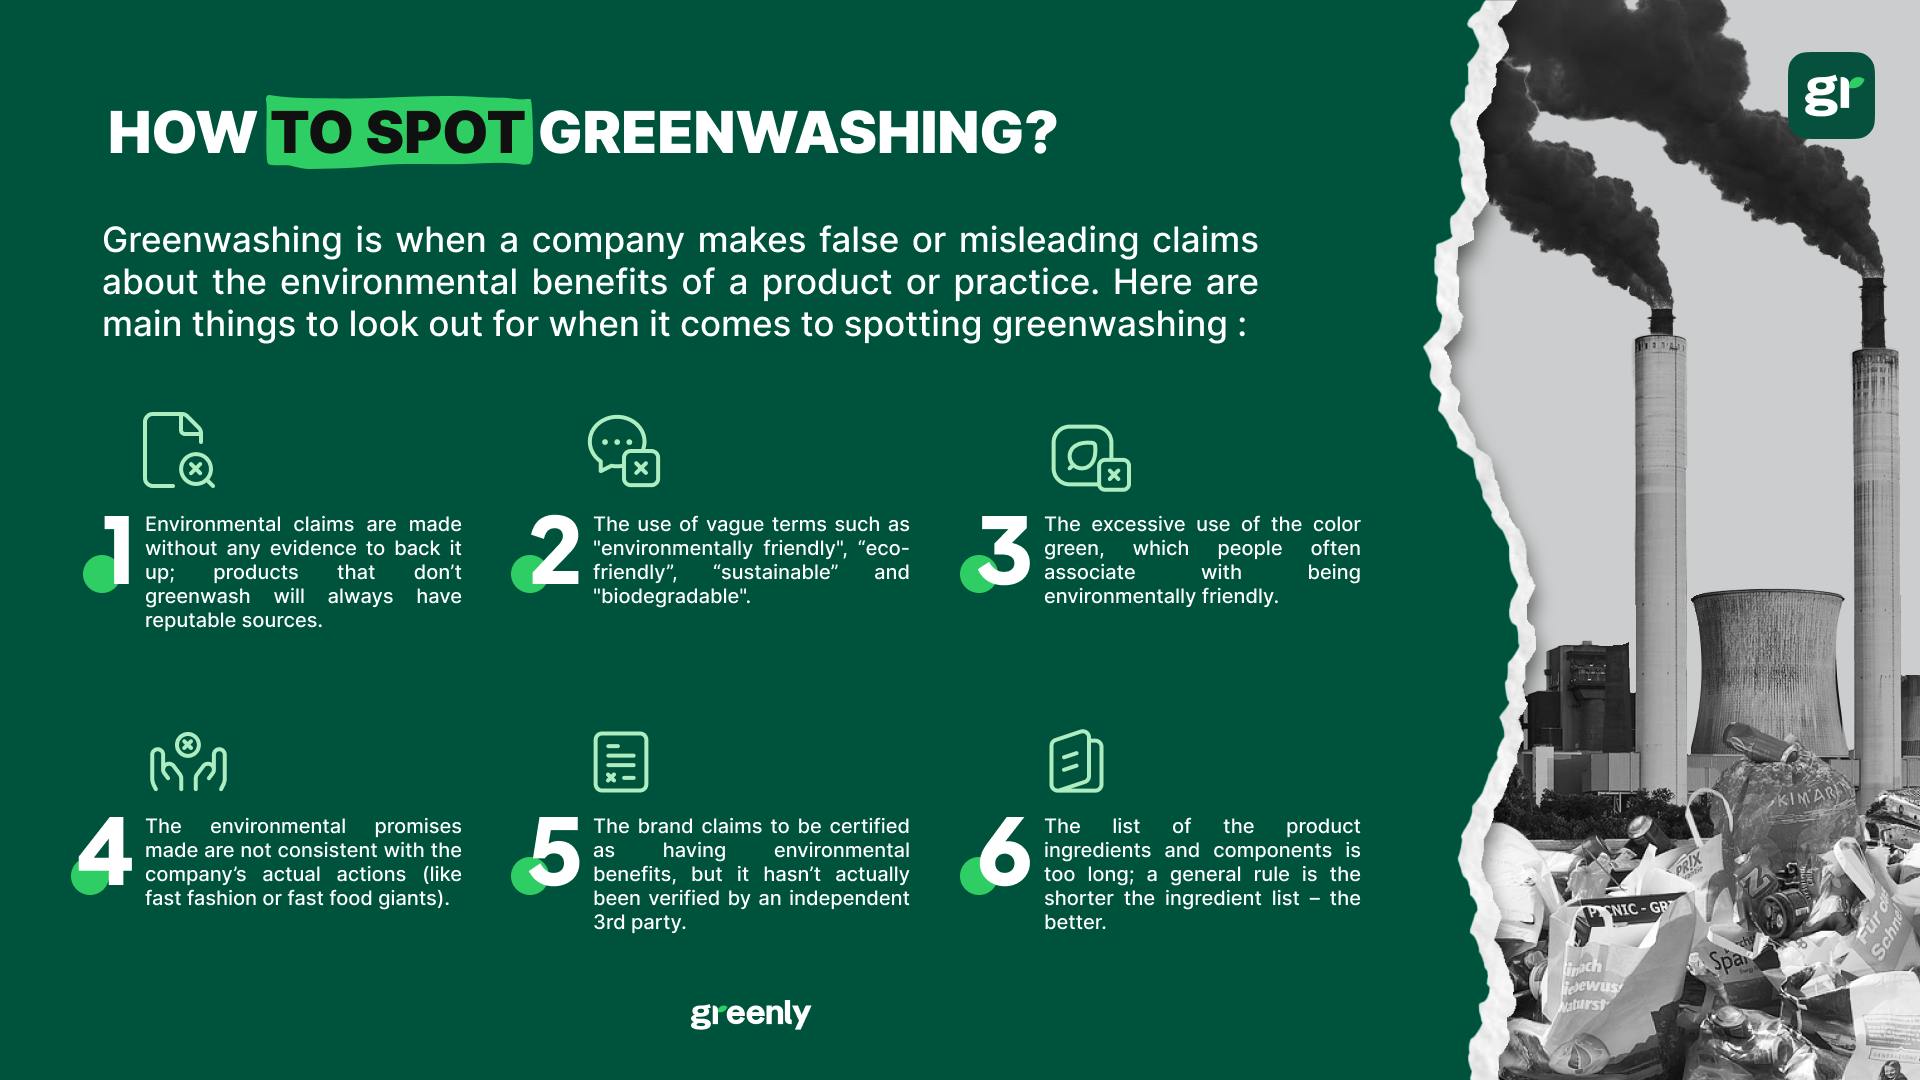 essay on greenwashing